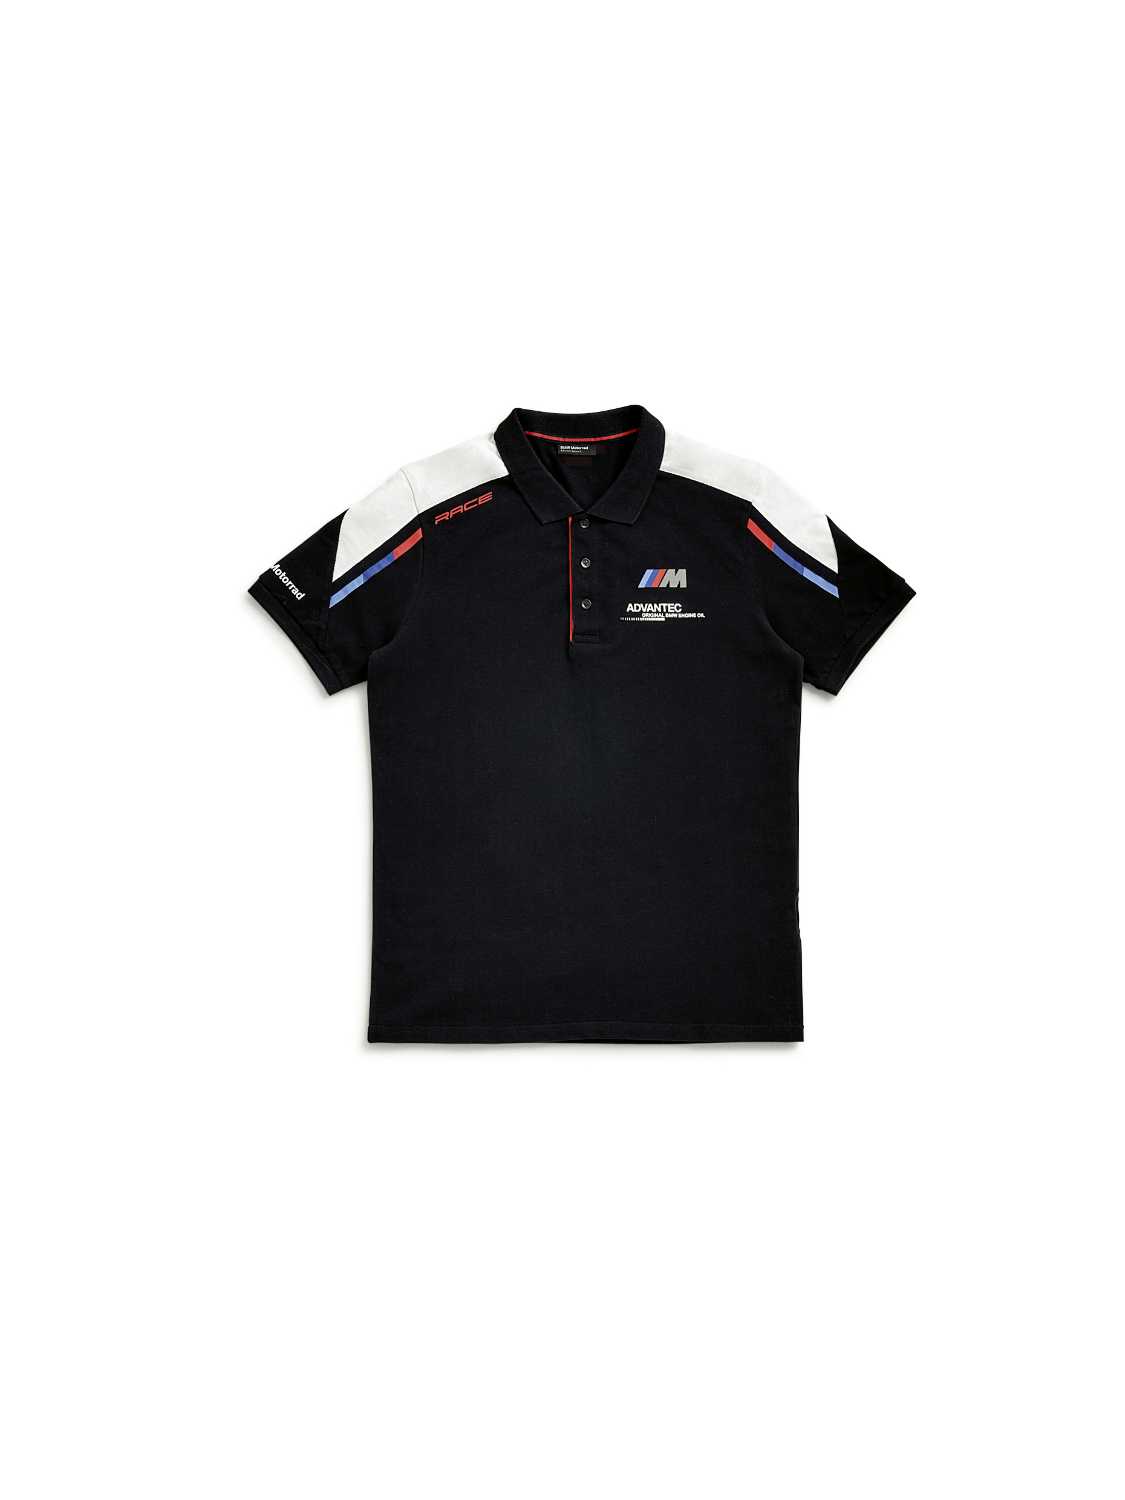 bmw motorsport polo shirt